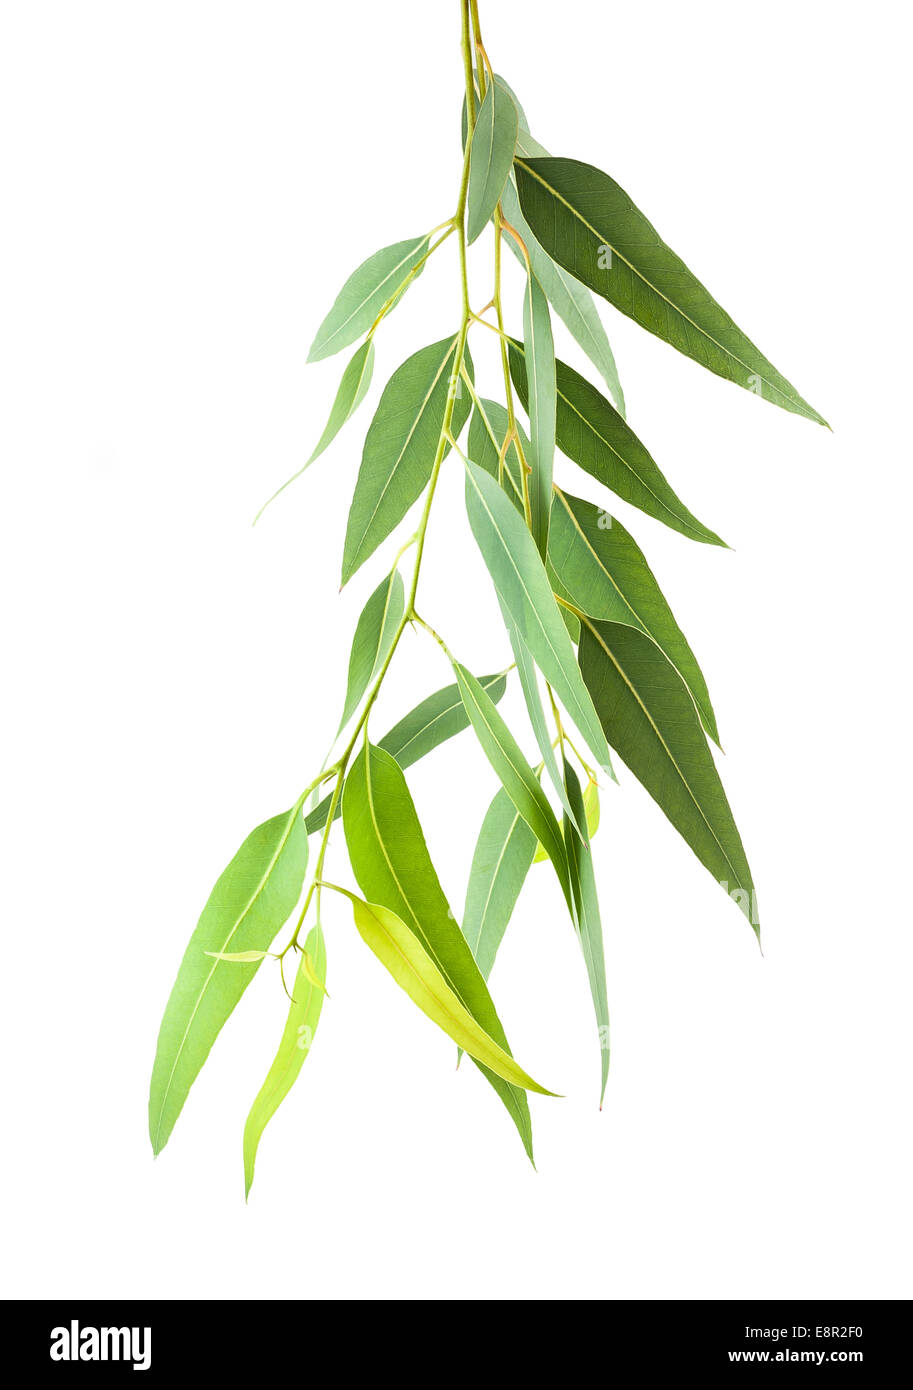 eucalyptus branch isolated on white background Stock Photo